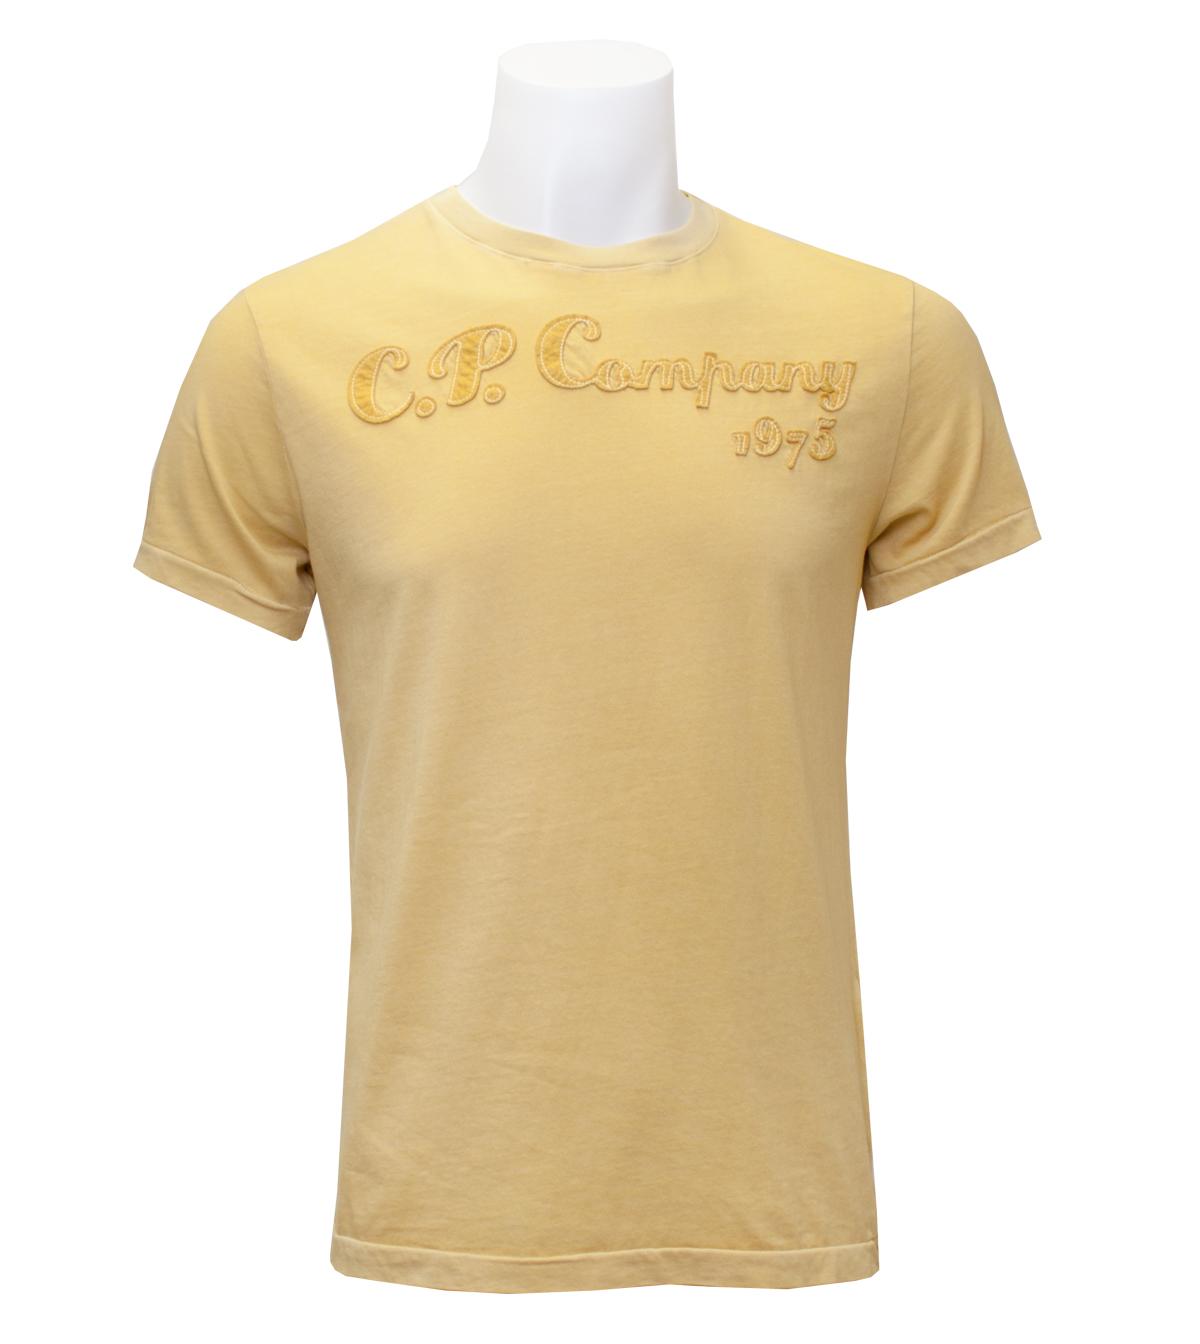 Foto CP Company Washed Yellow Cotton Crew Neck T-Shirt-L foto 965639